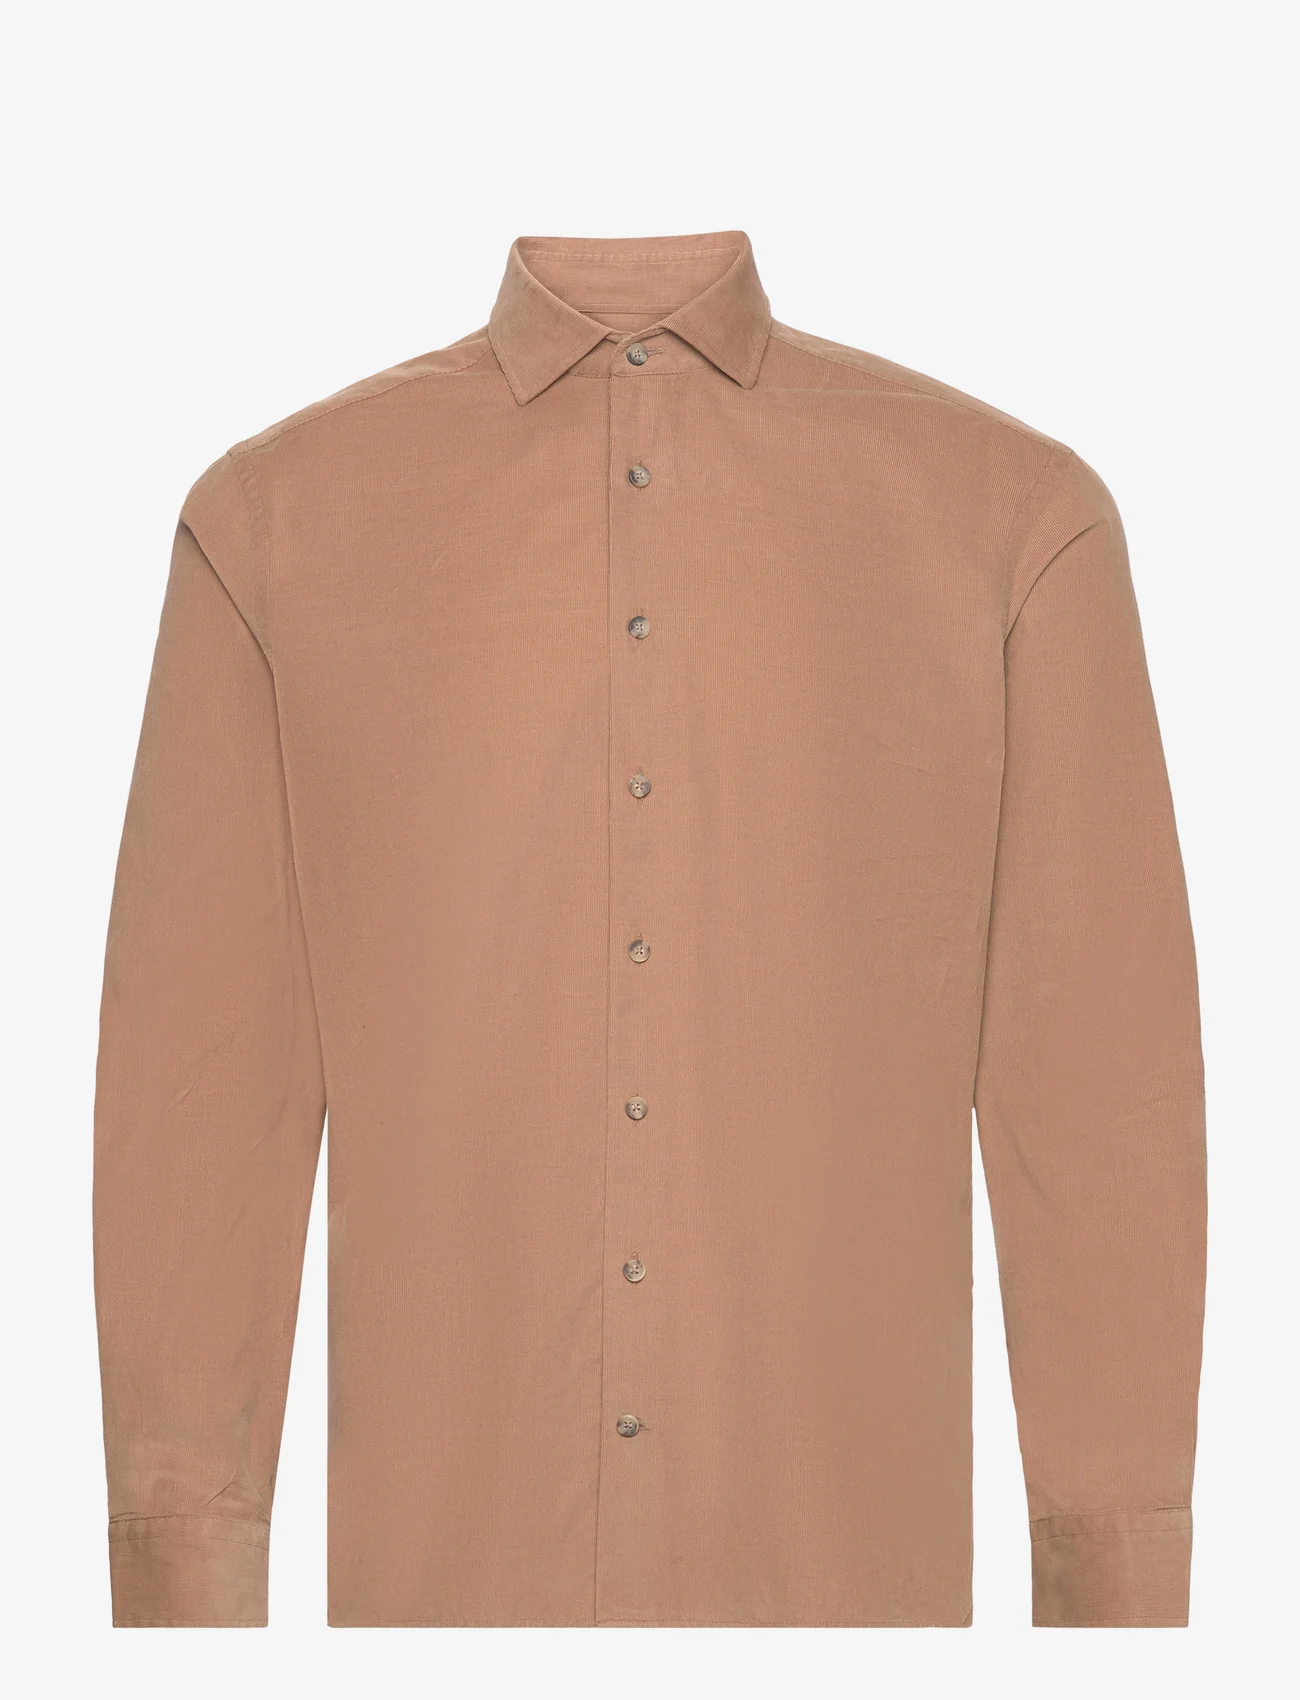 Hackett London - SMART BABYCORD - basic skjortor - camel beige - 0